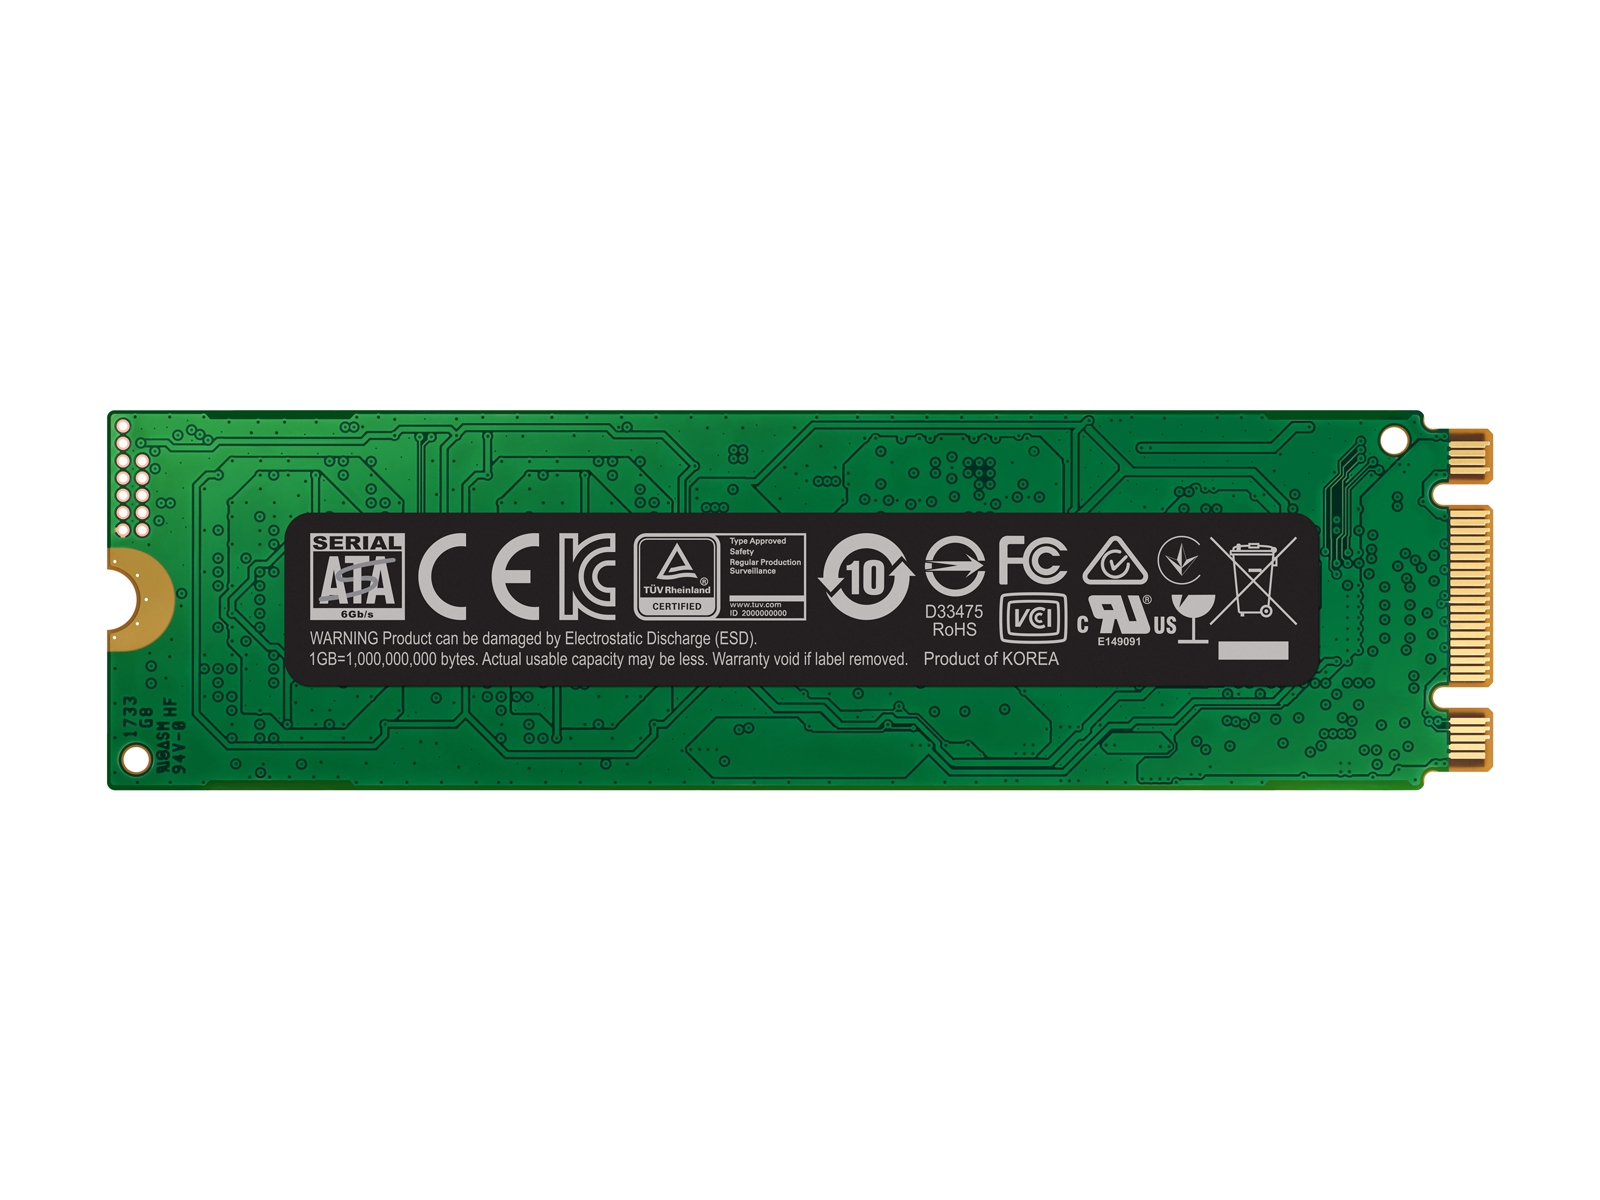  Samsung SSD 860 EVO 250GB 2.5 Inch SATA III Internal SSD  (MZ-76E250B/AM) : Electronics